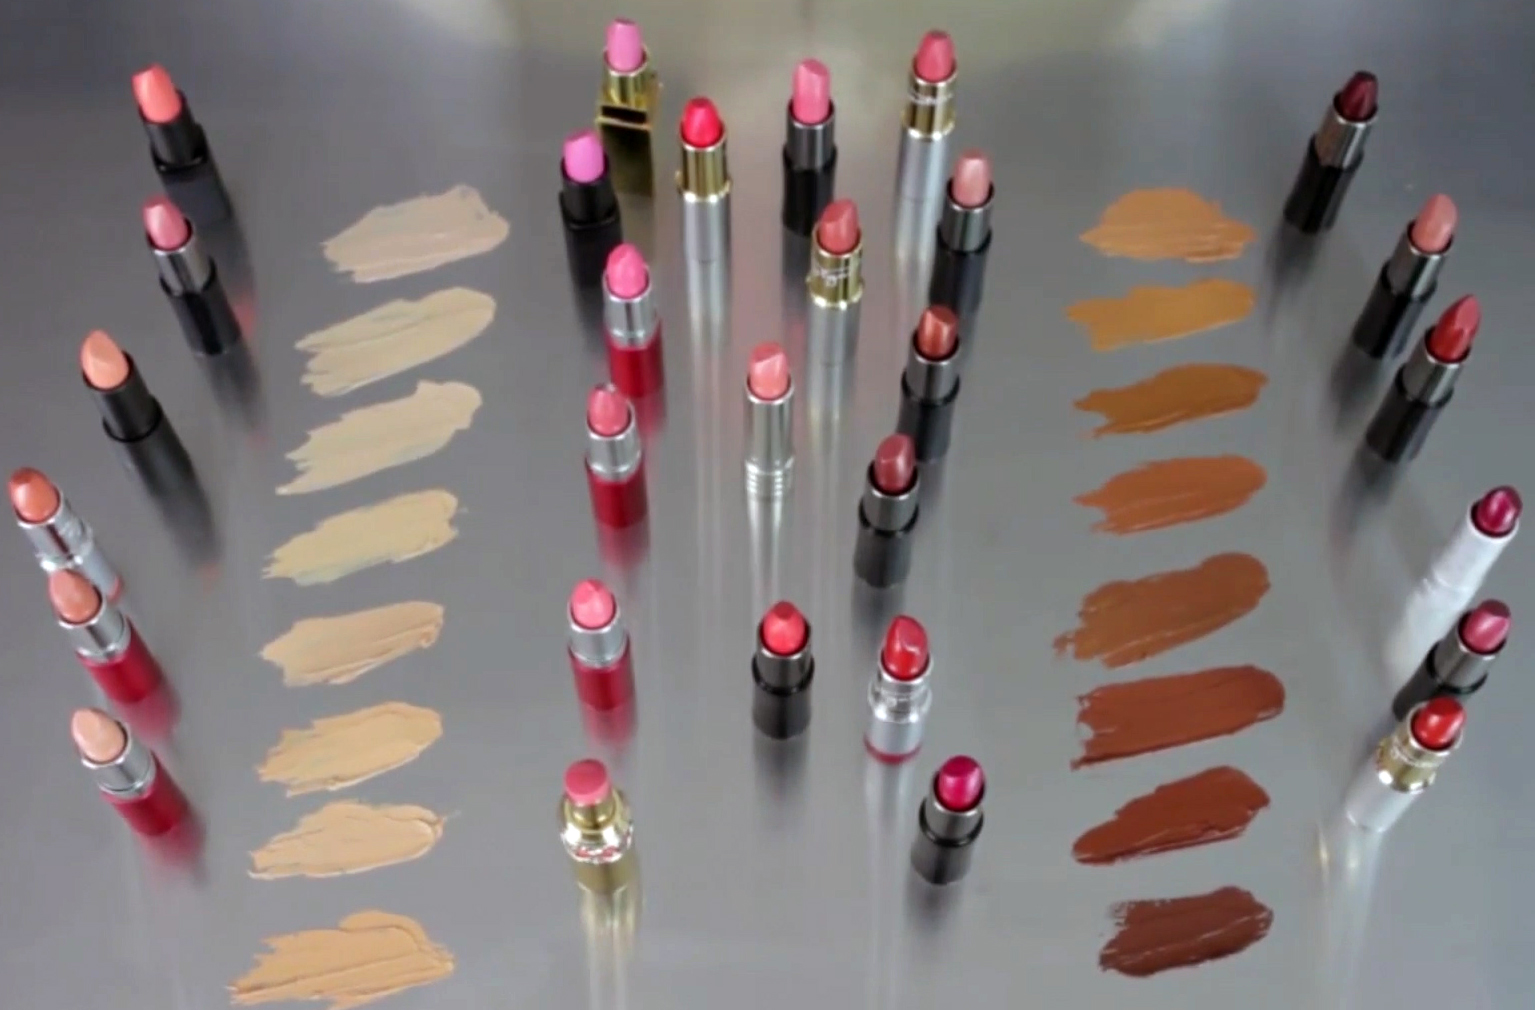 Lipsticks and skin tones